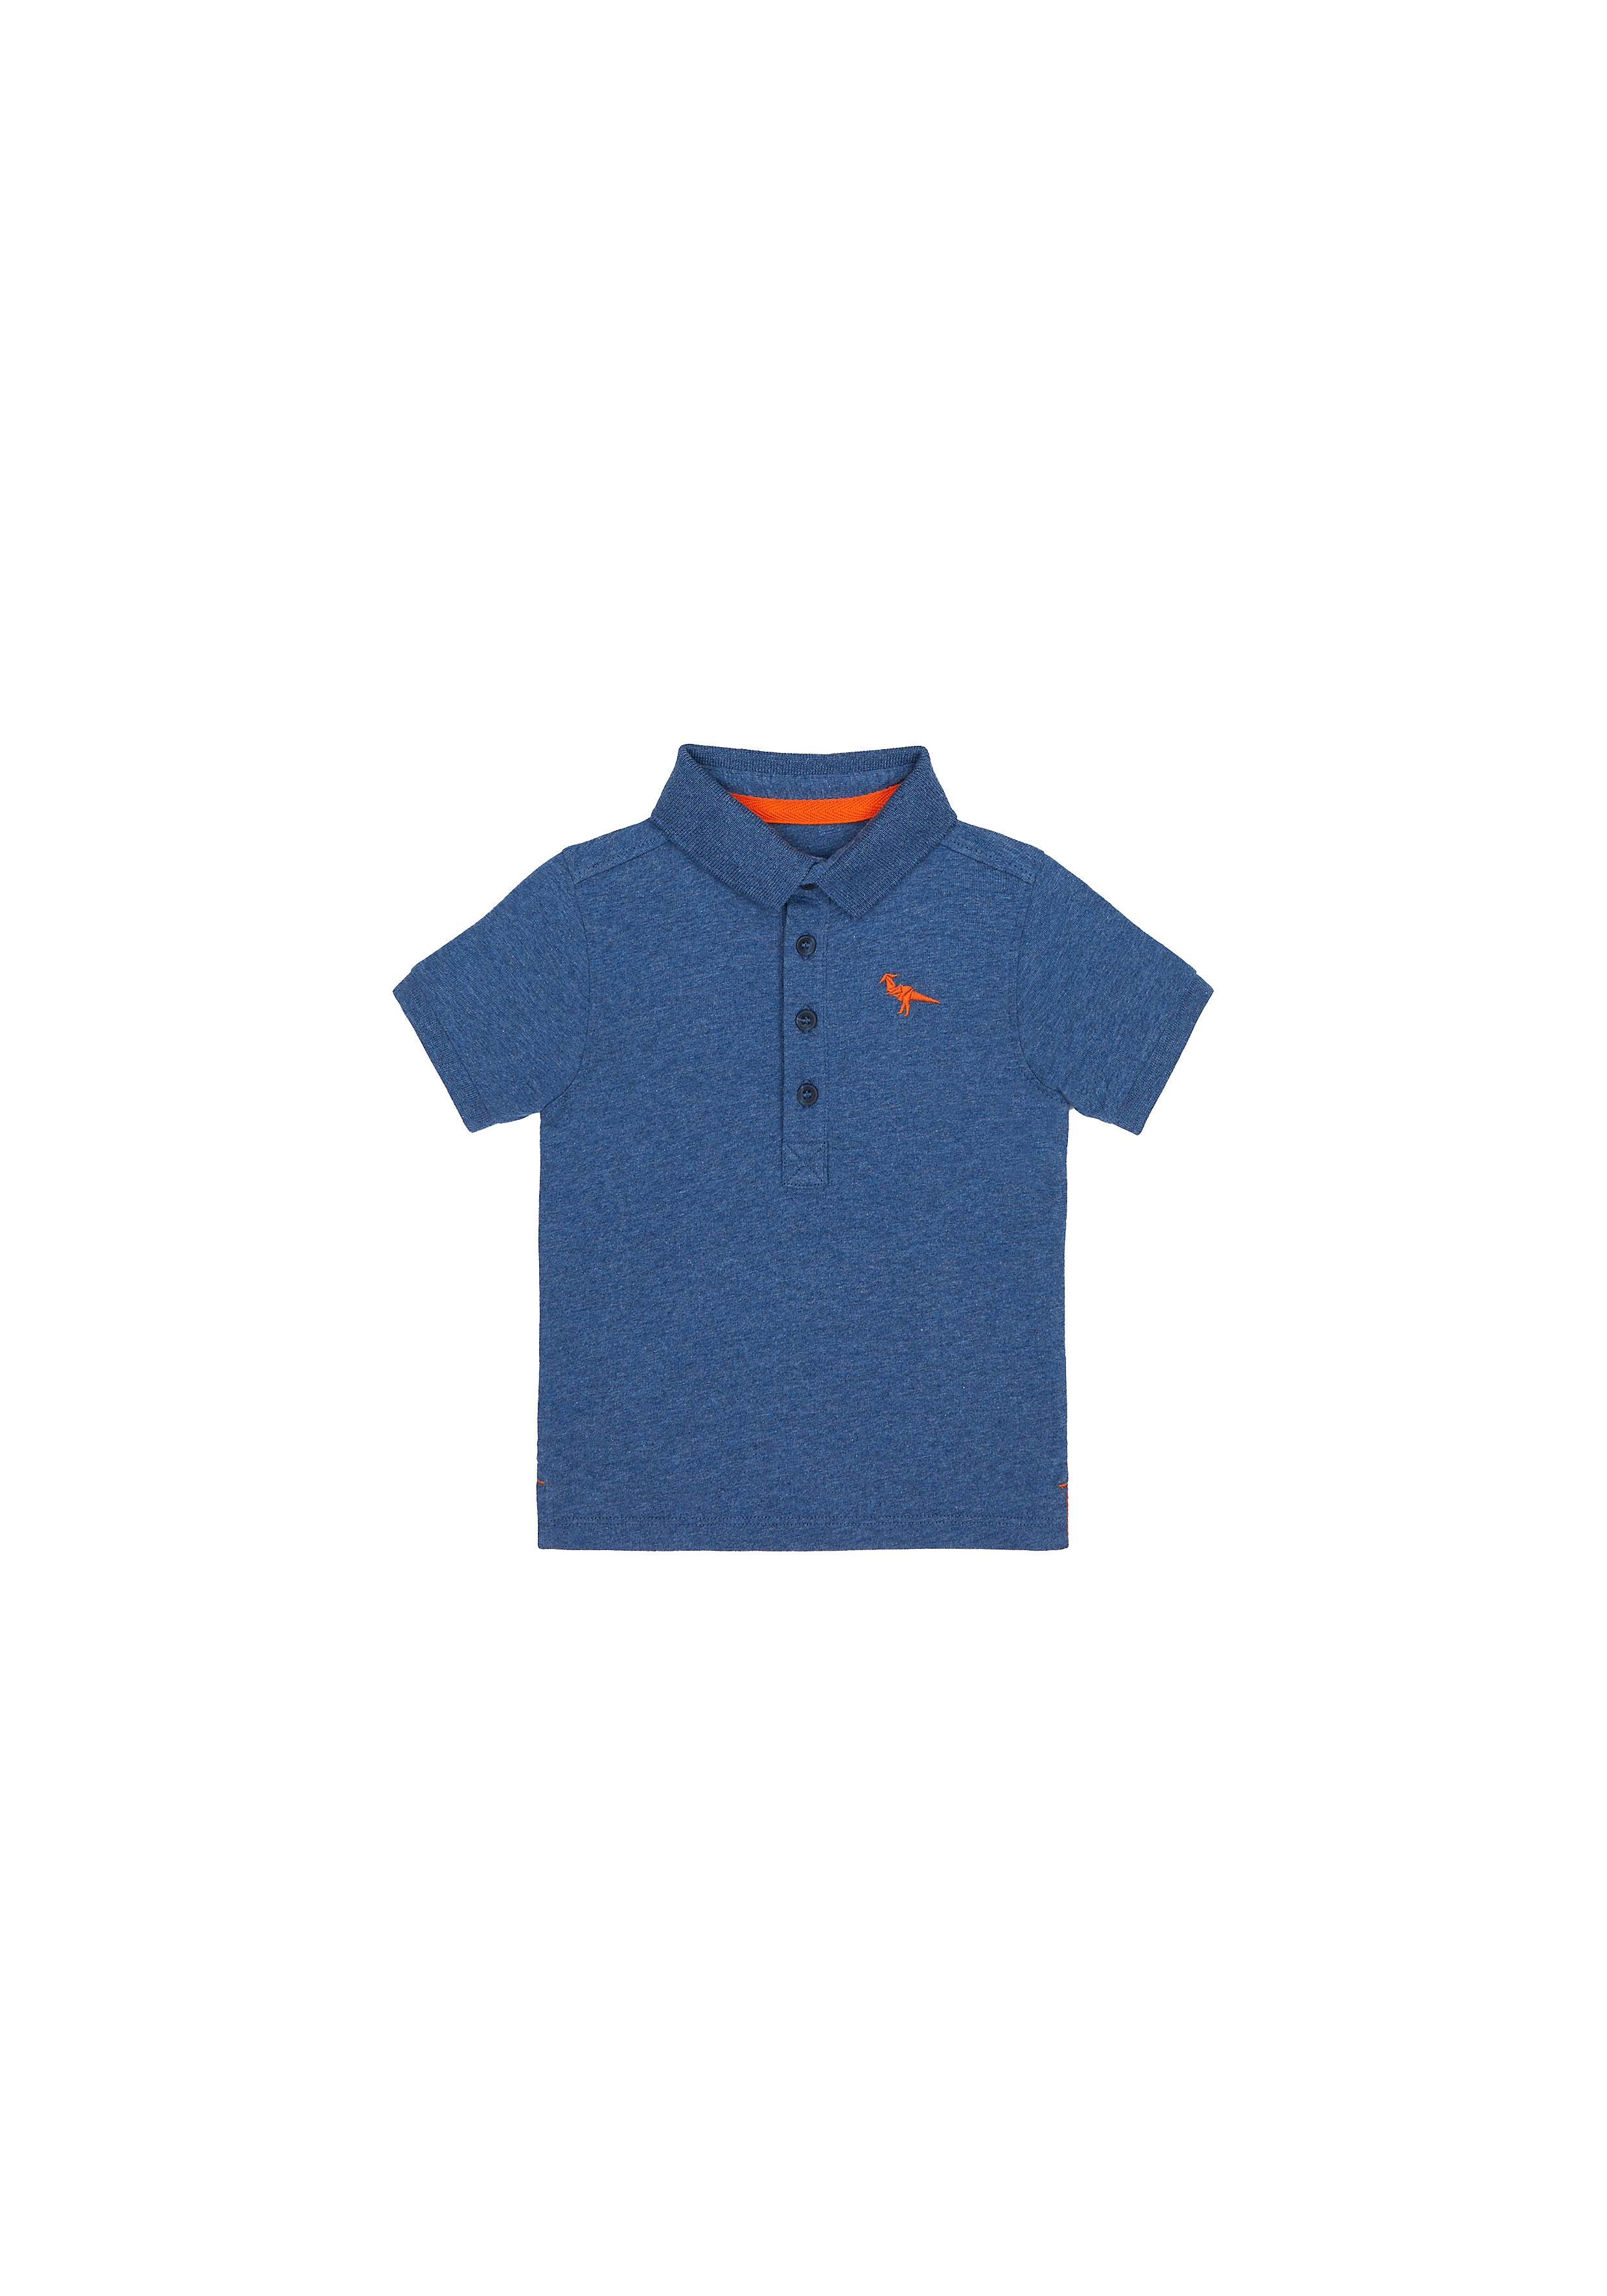 Boys Half Sleeves Polo T-Shirt Dino Embroidery - Navy